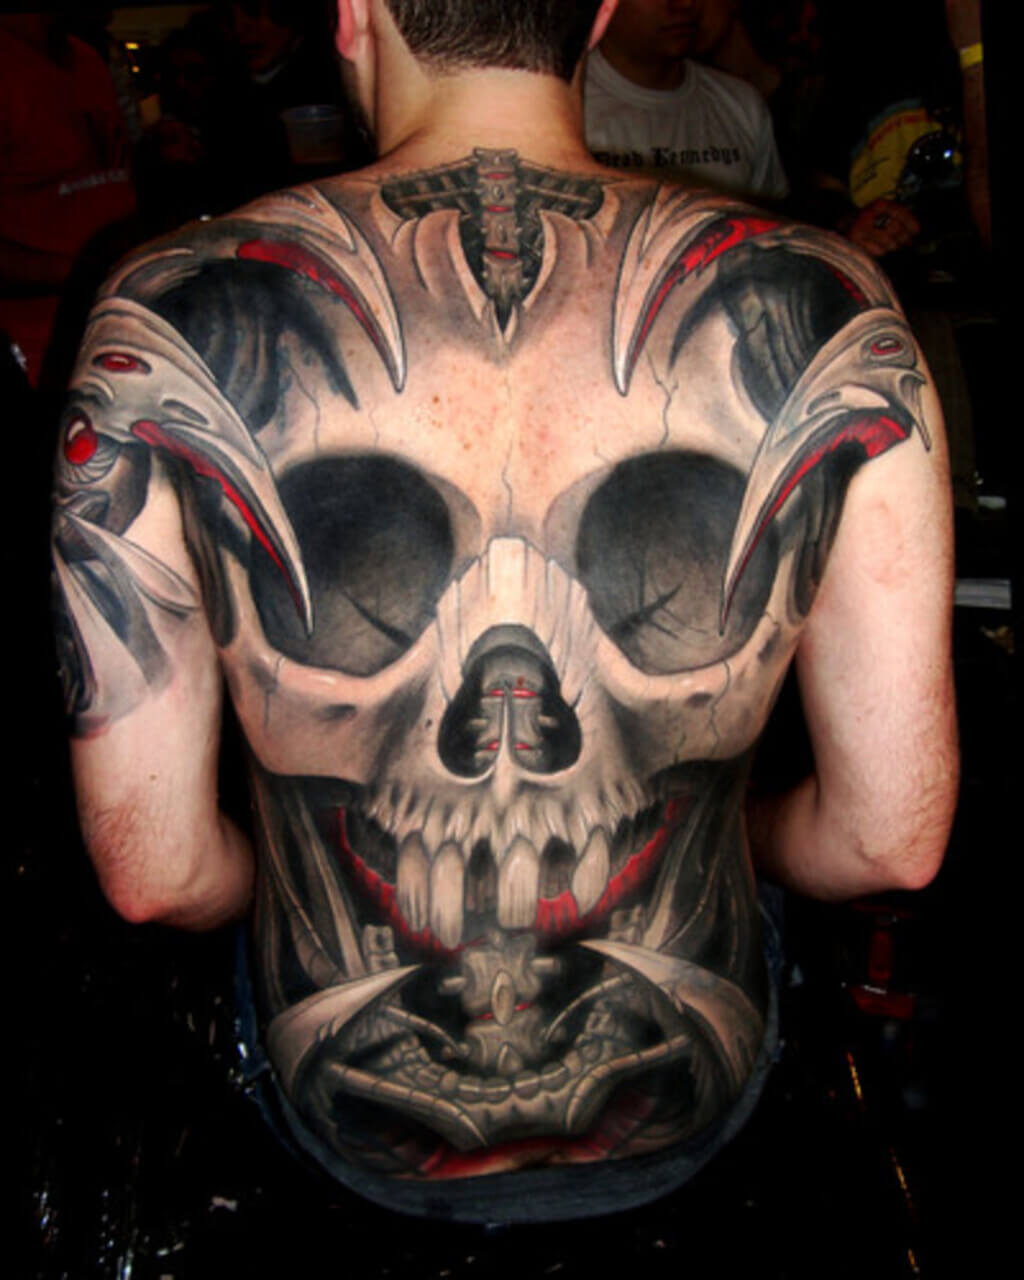 Skull Tattoo: tattoo ideas for men 2021